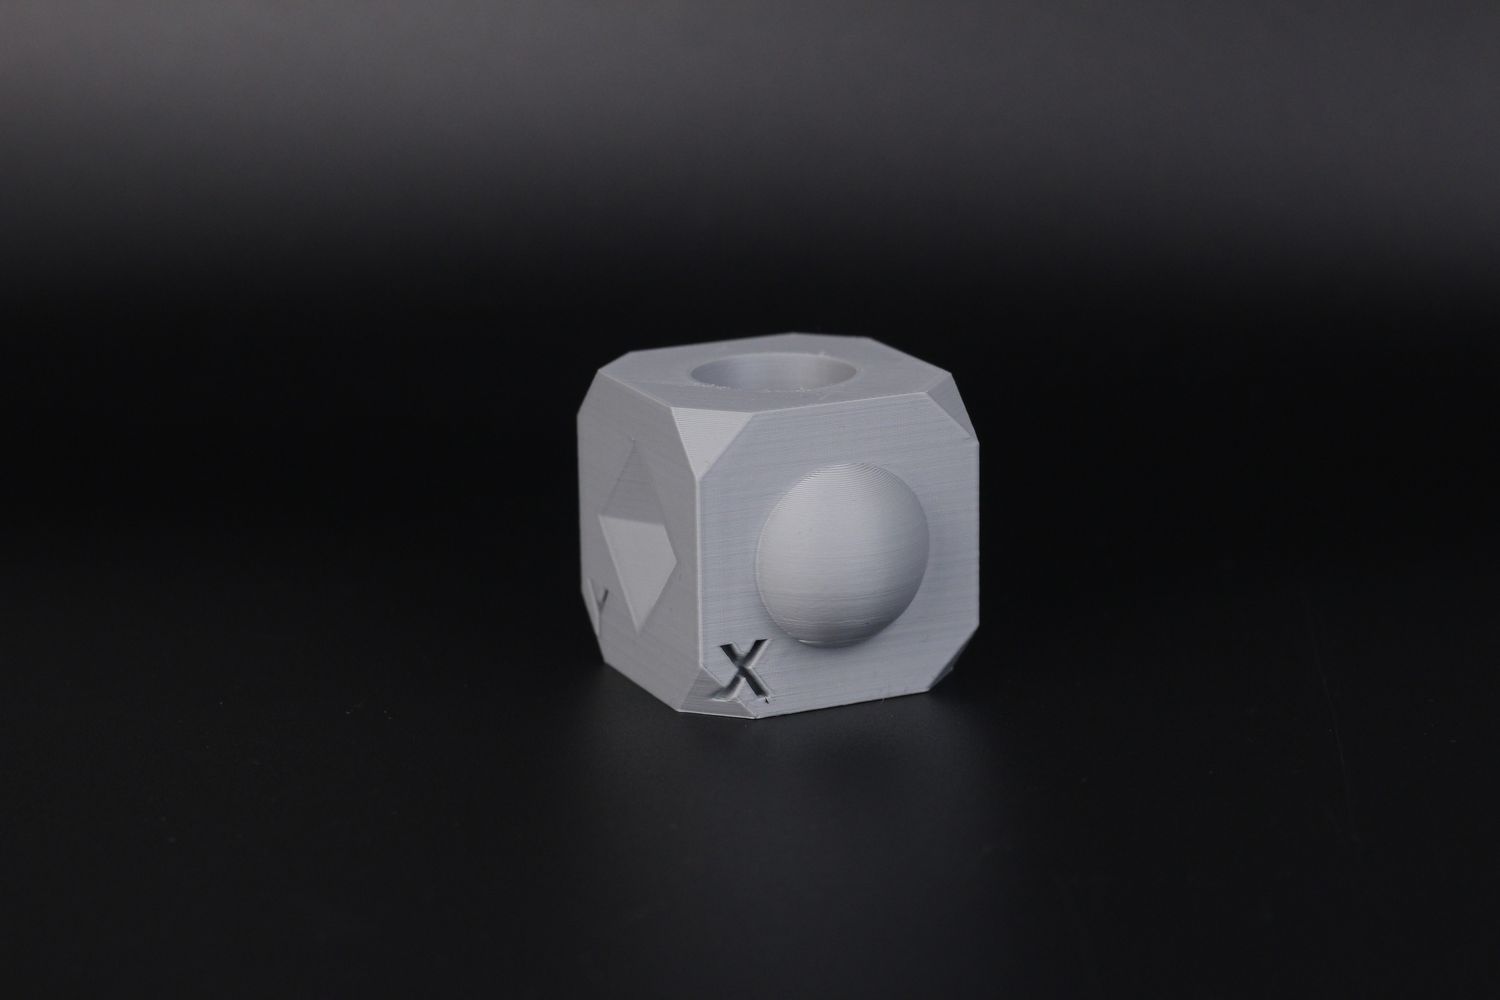 40mm Zaribo Calibration Cube Bambu Lab X1 Review1 | Bambu Lab X1 Review: Just as Good